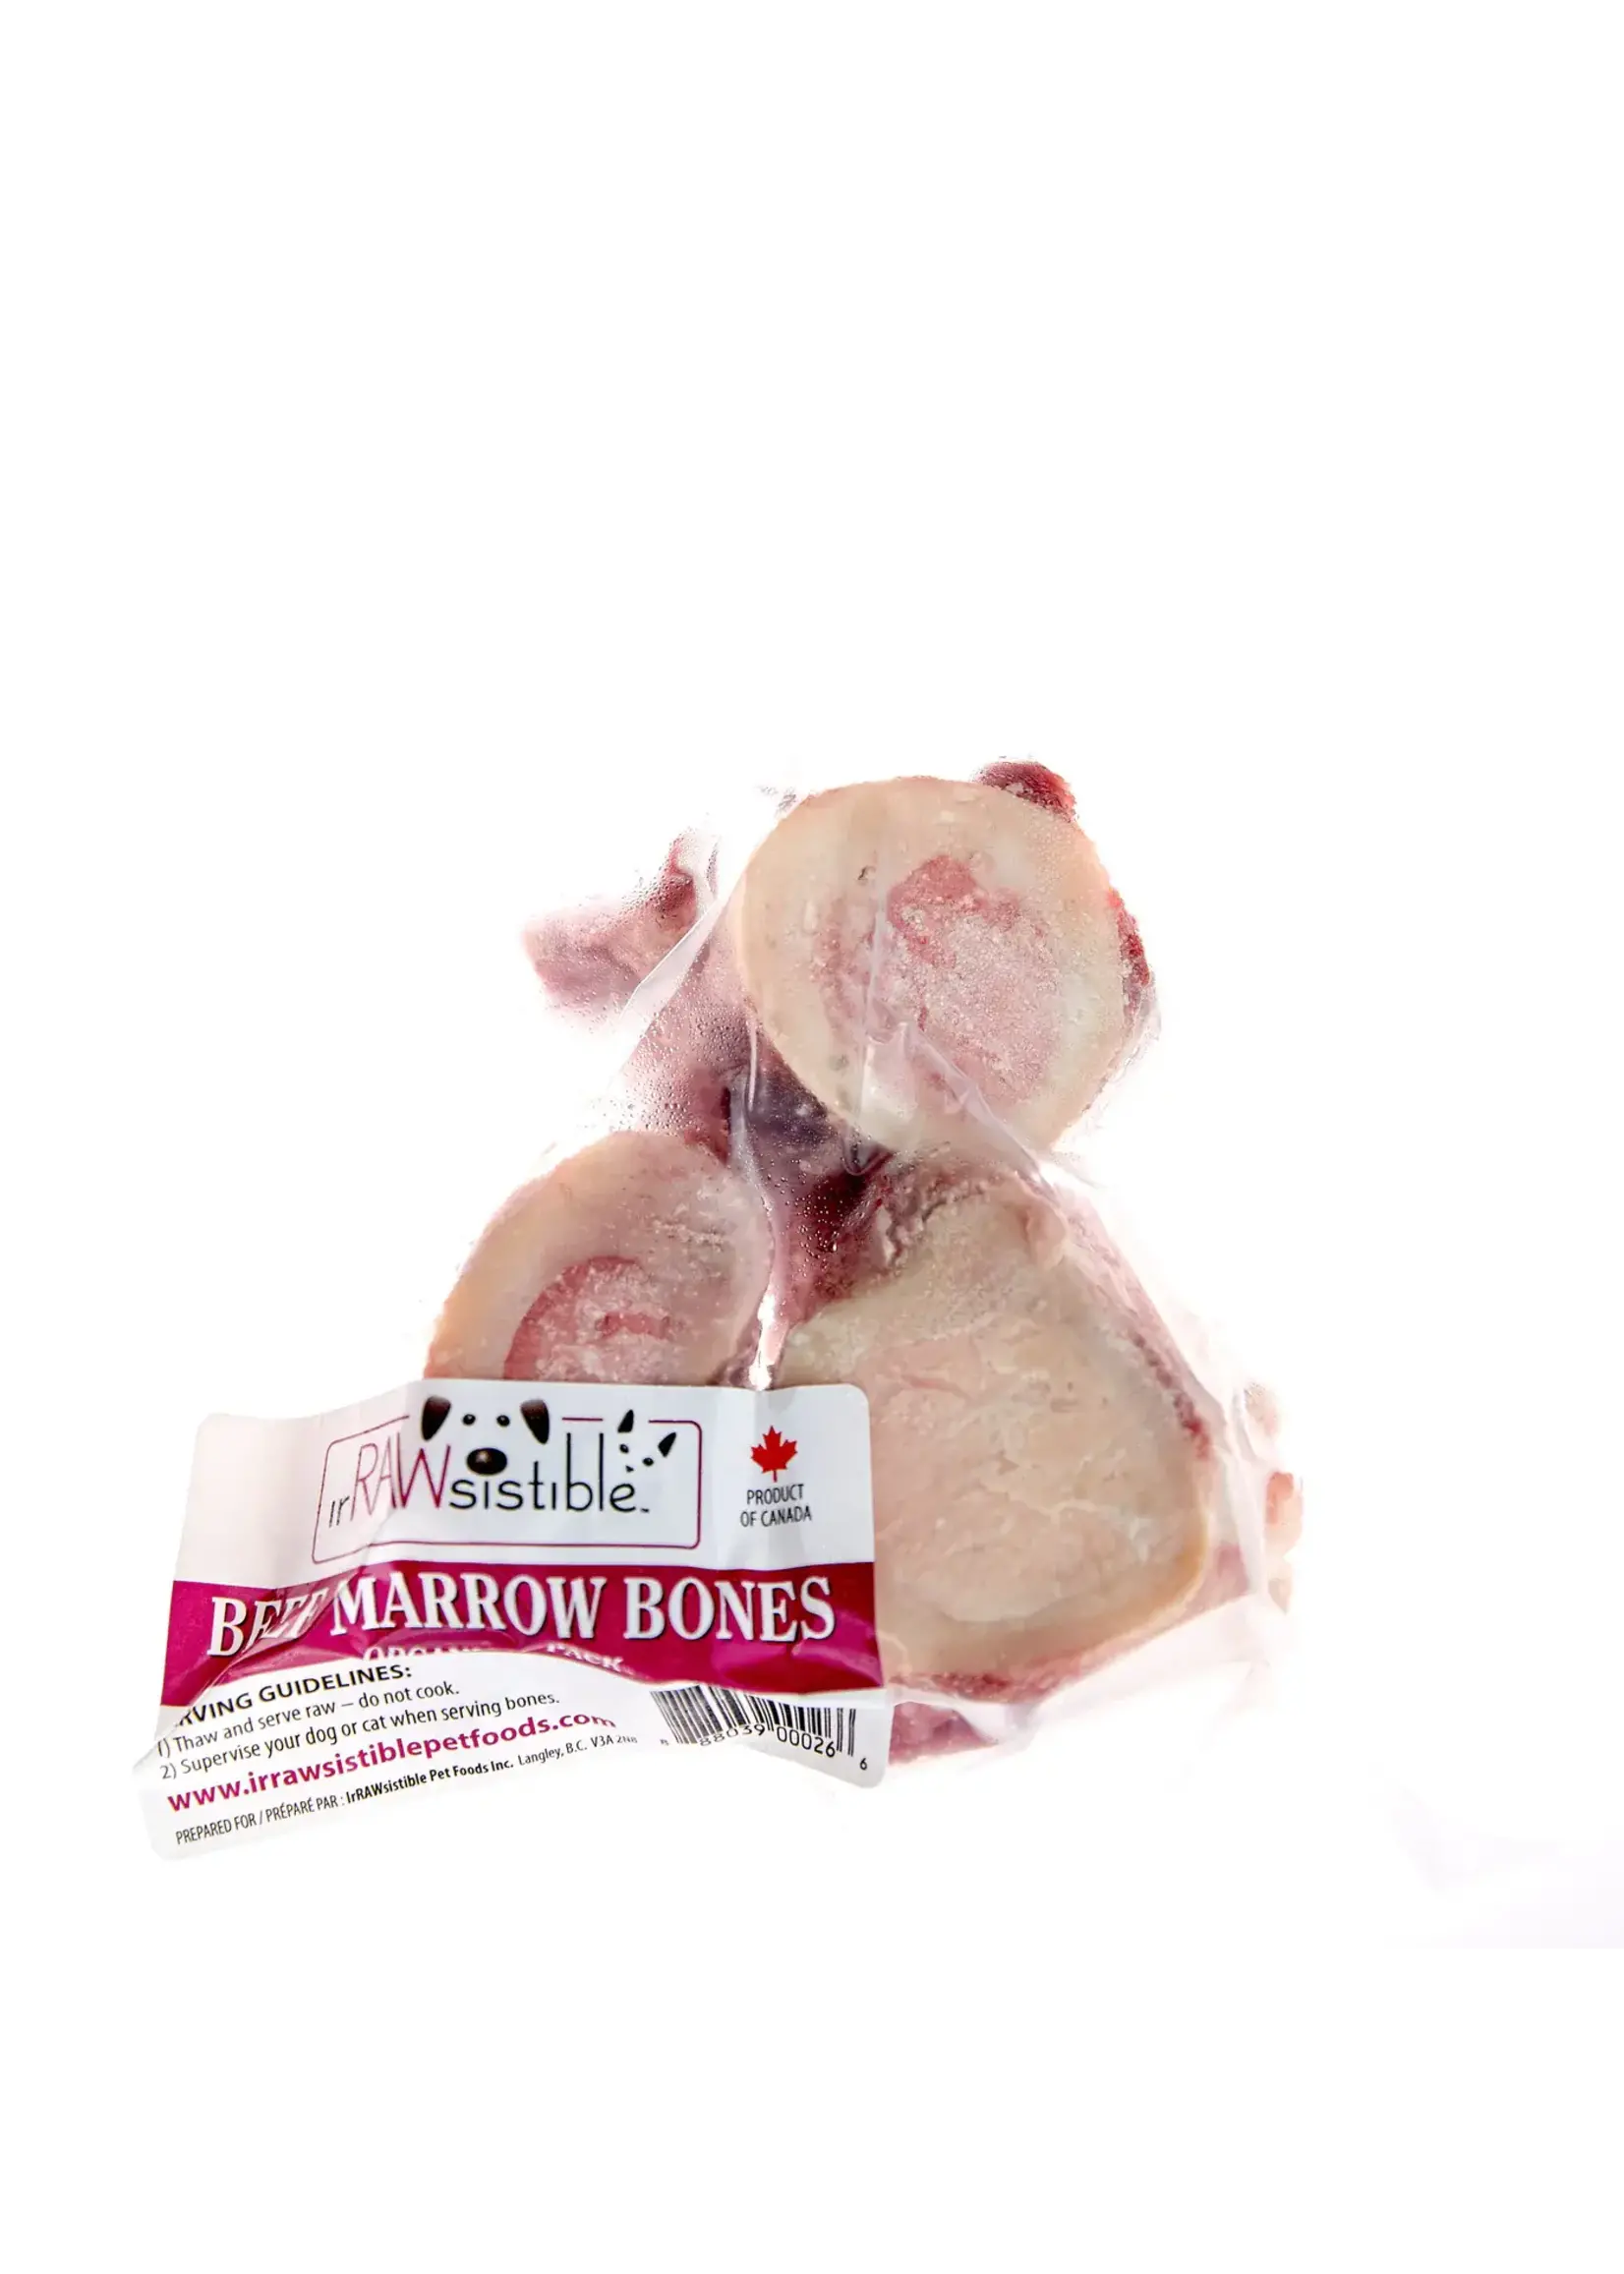 Irrawsistible Irrawsistible - Organic Beef Marrow Bones 3pk 1.75"